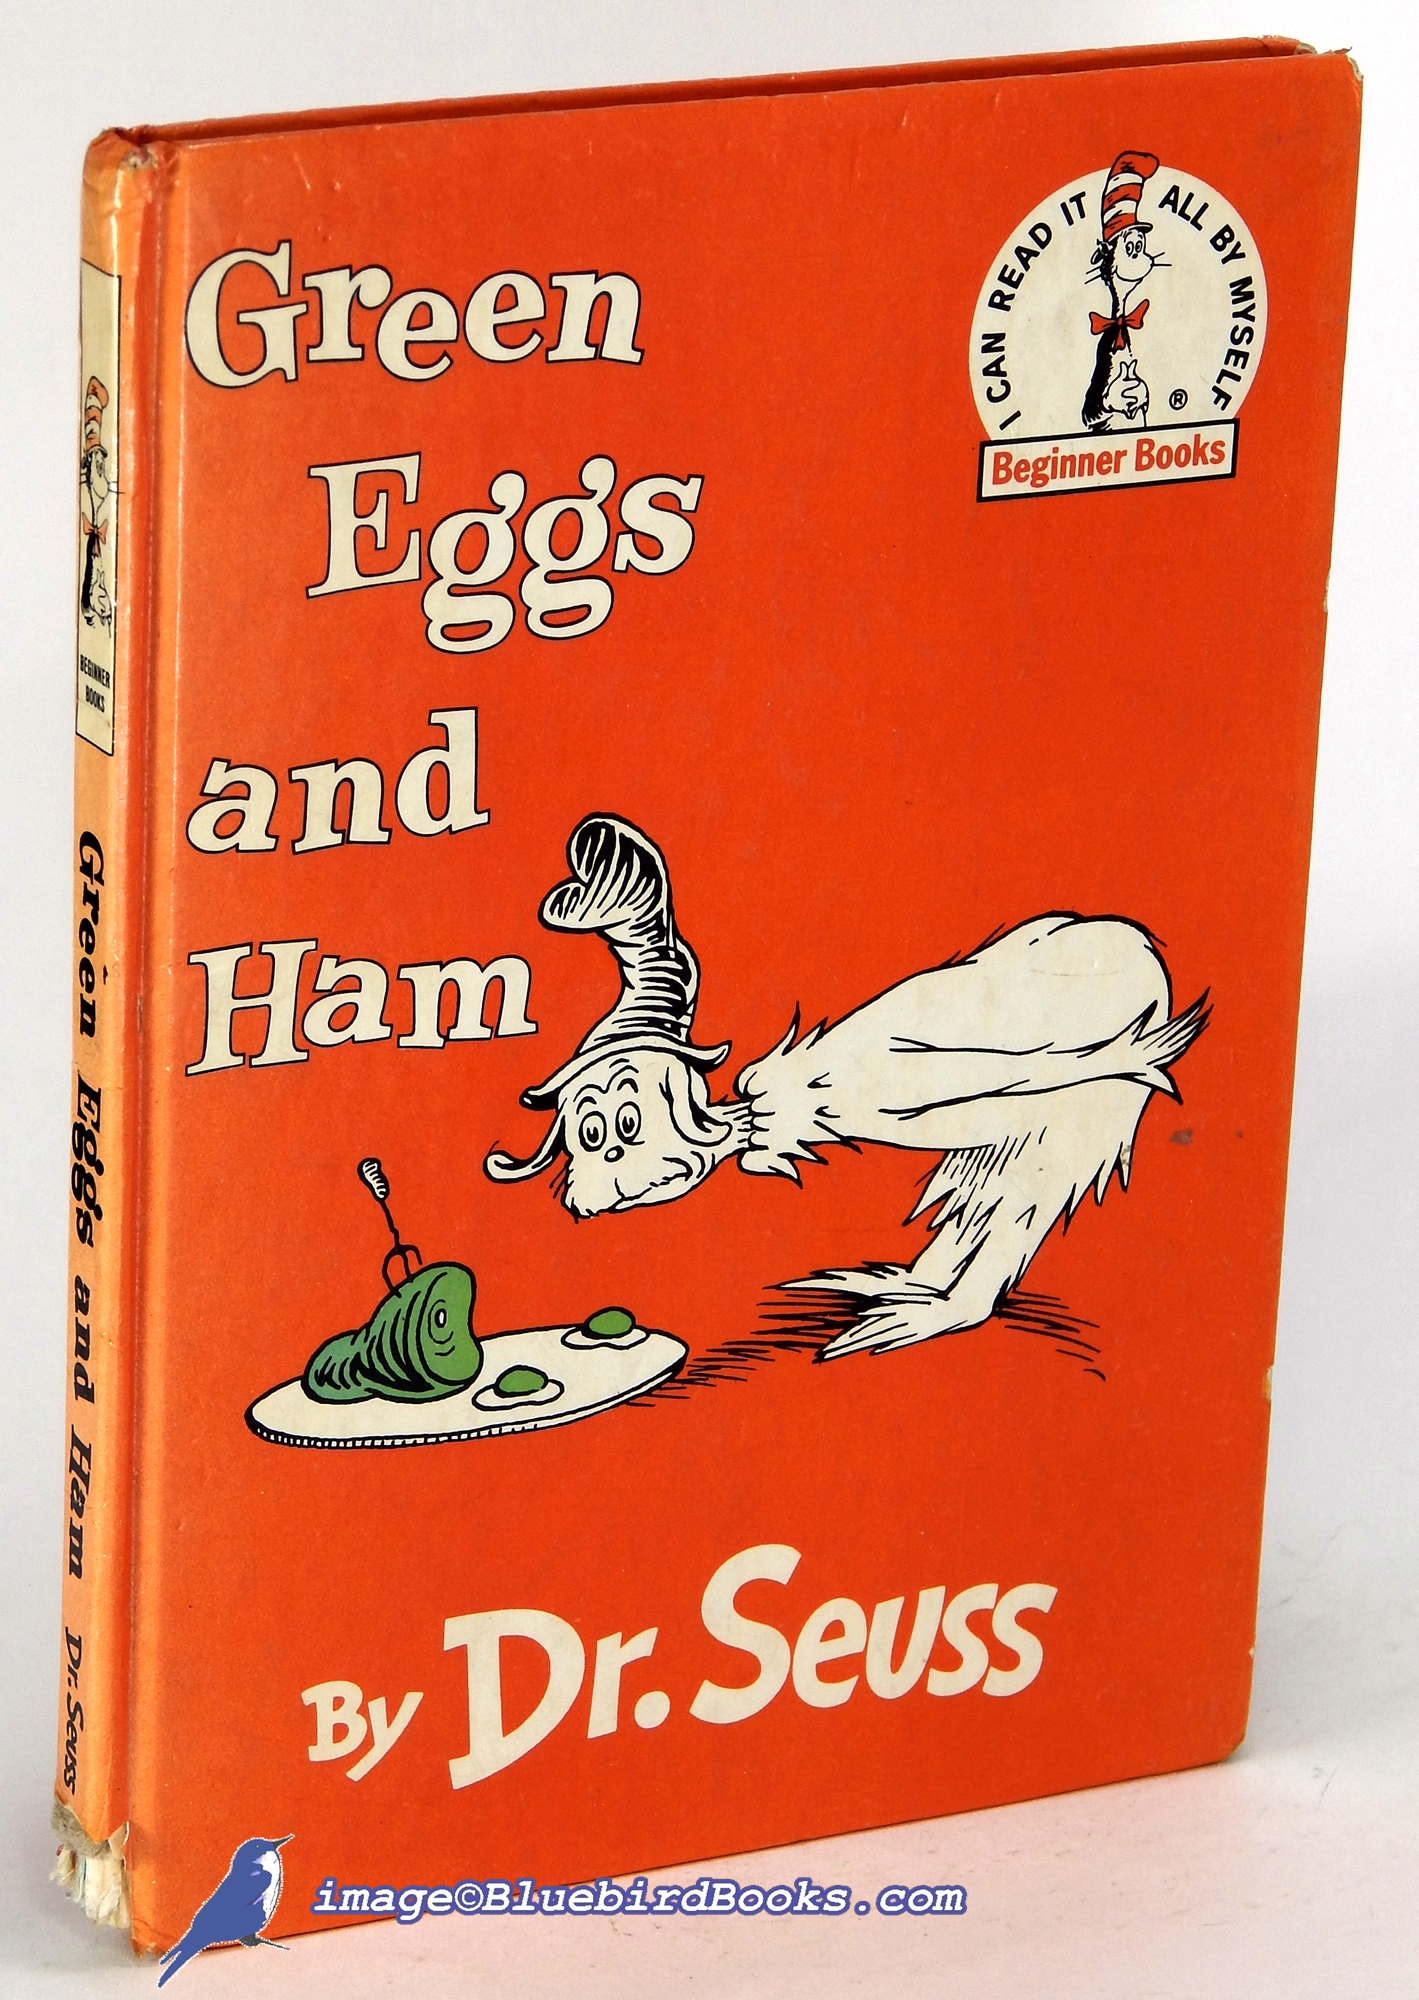 SEUSS, DR. - Green Eggs and Ham